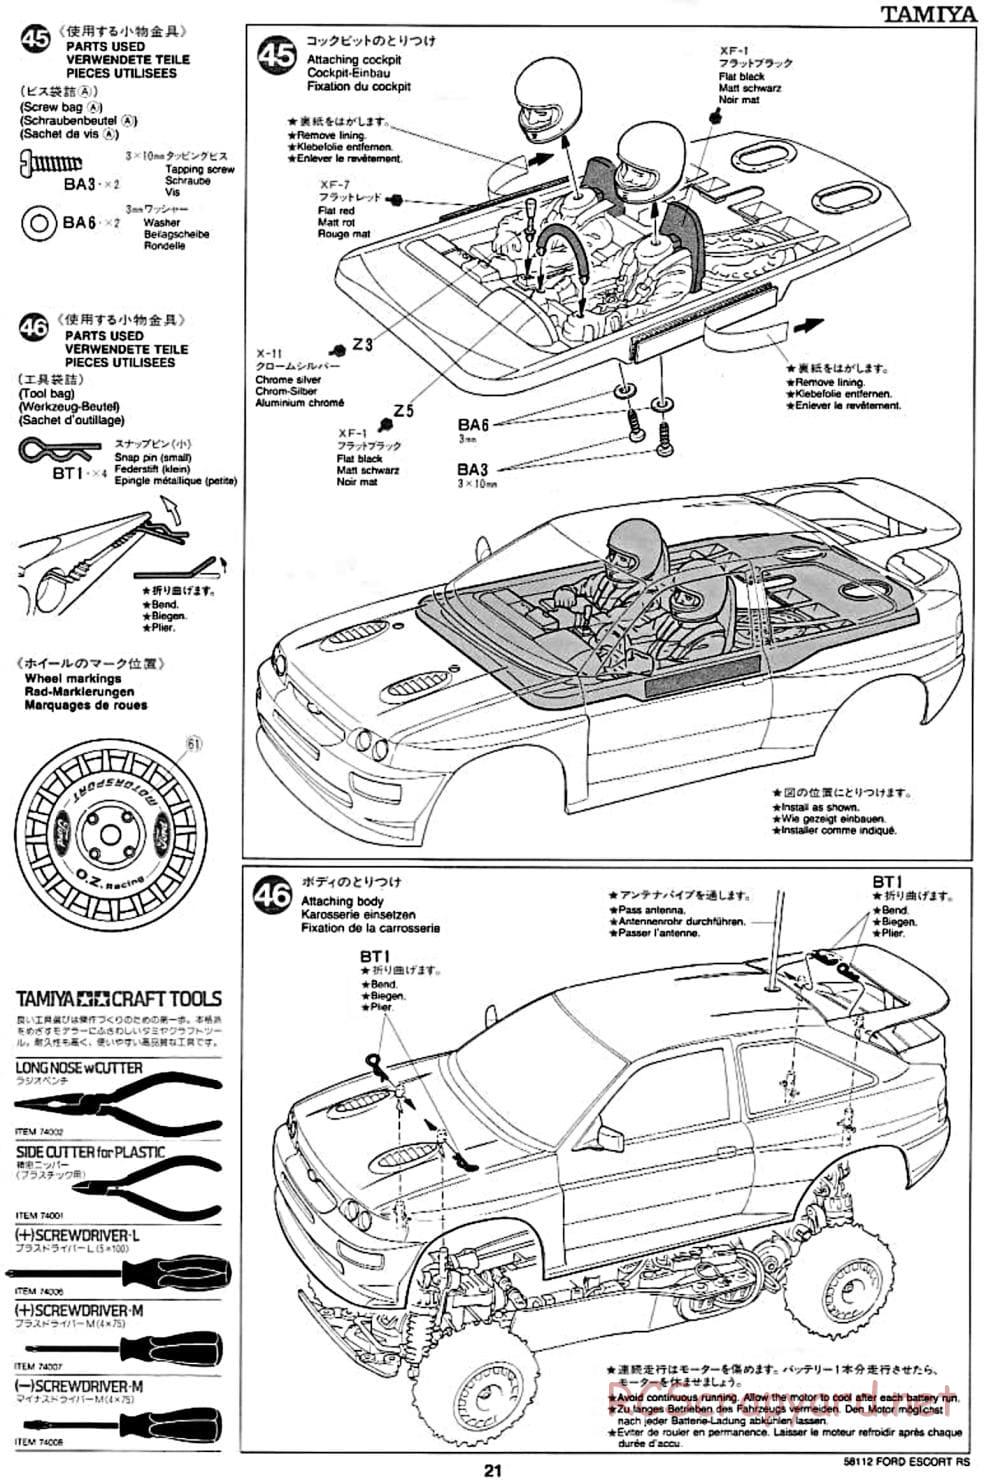 Tamiya - Ford Escort RS Cosworth - TA-01 Chassis - Manual - Page 21